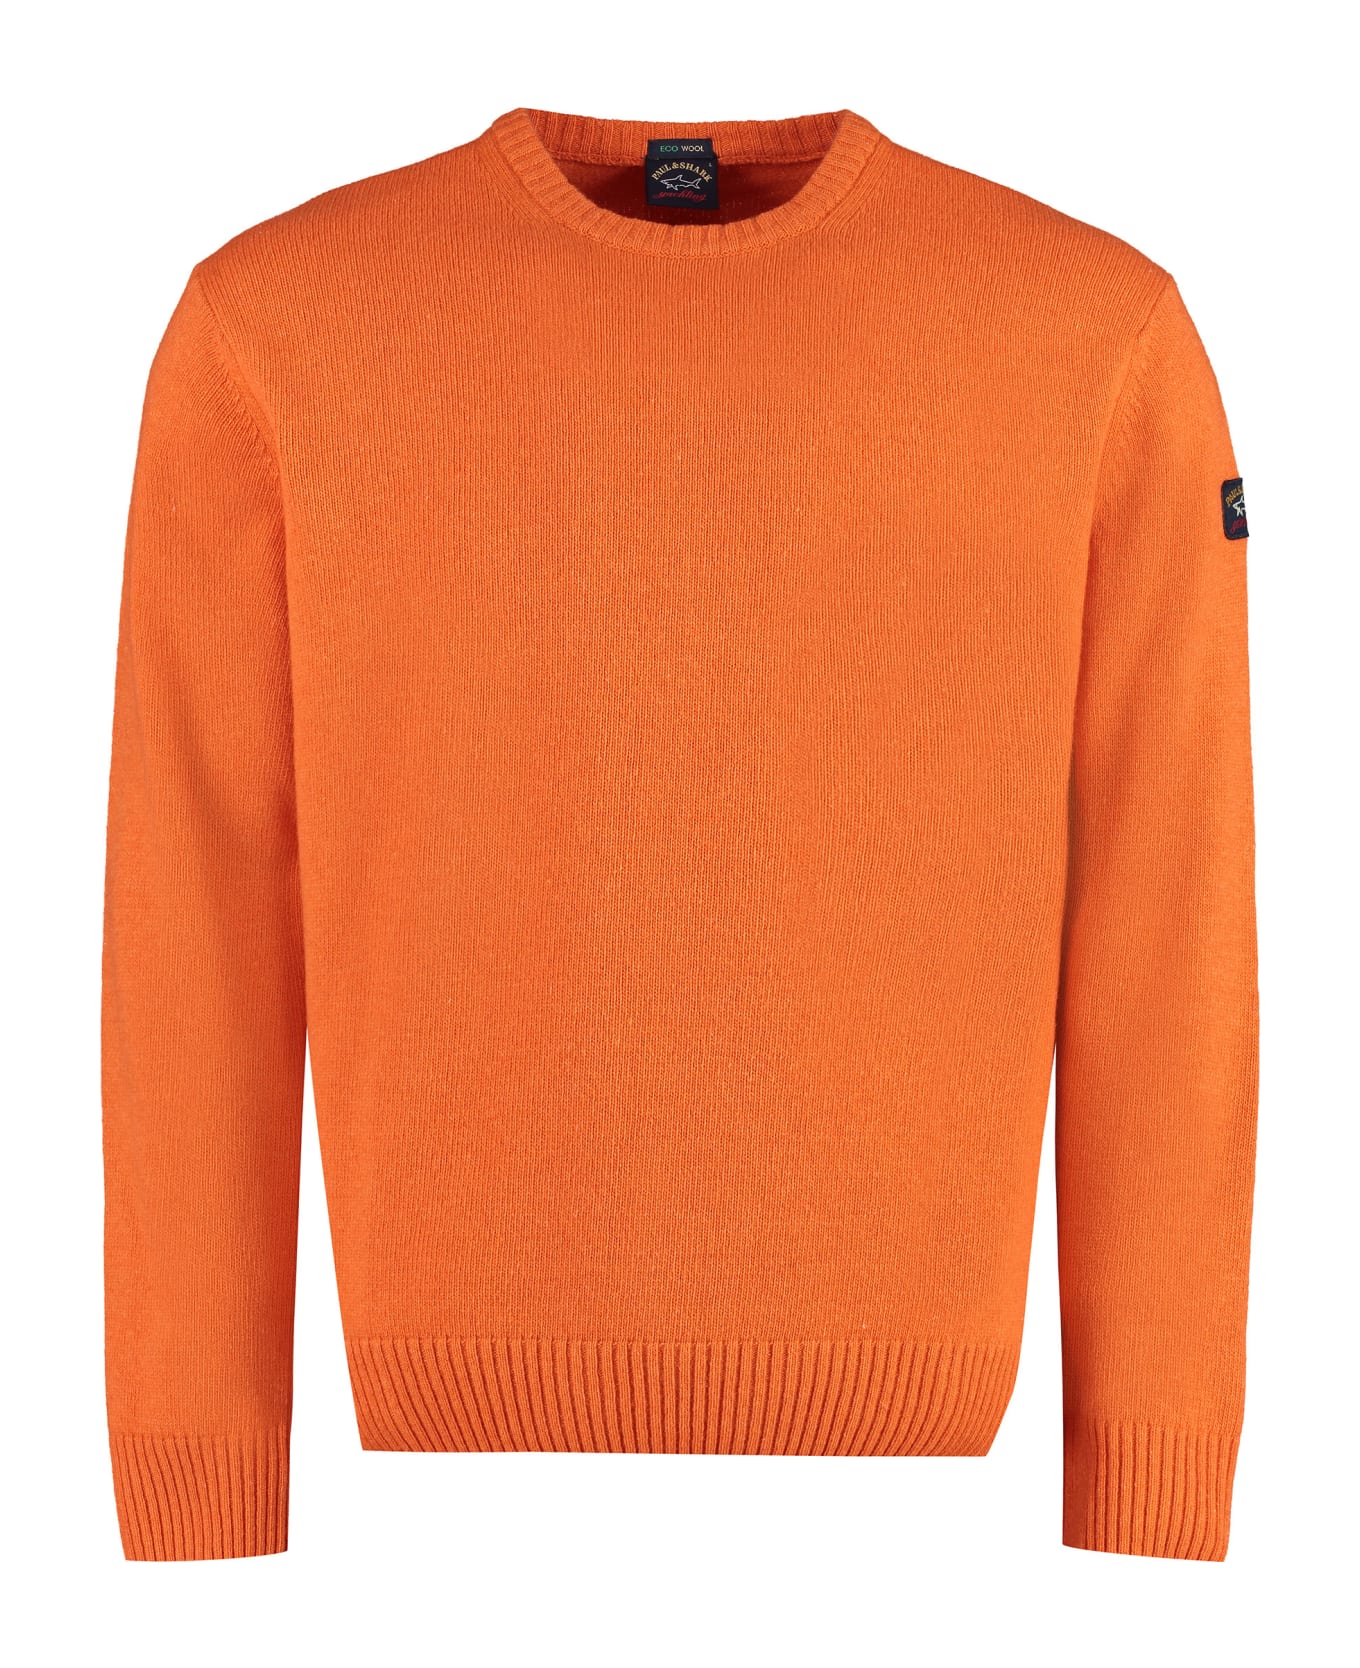 Paul&Shark Wool-blend Crew-neck Sweater - Orange